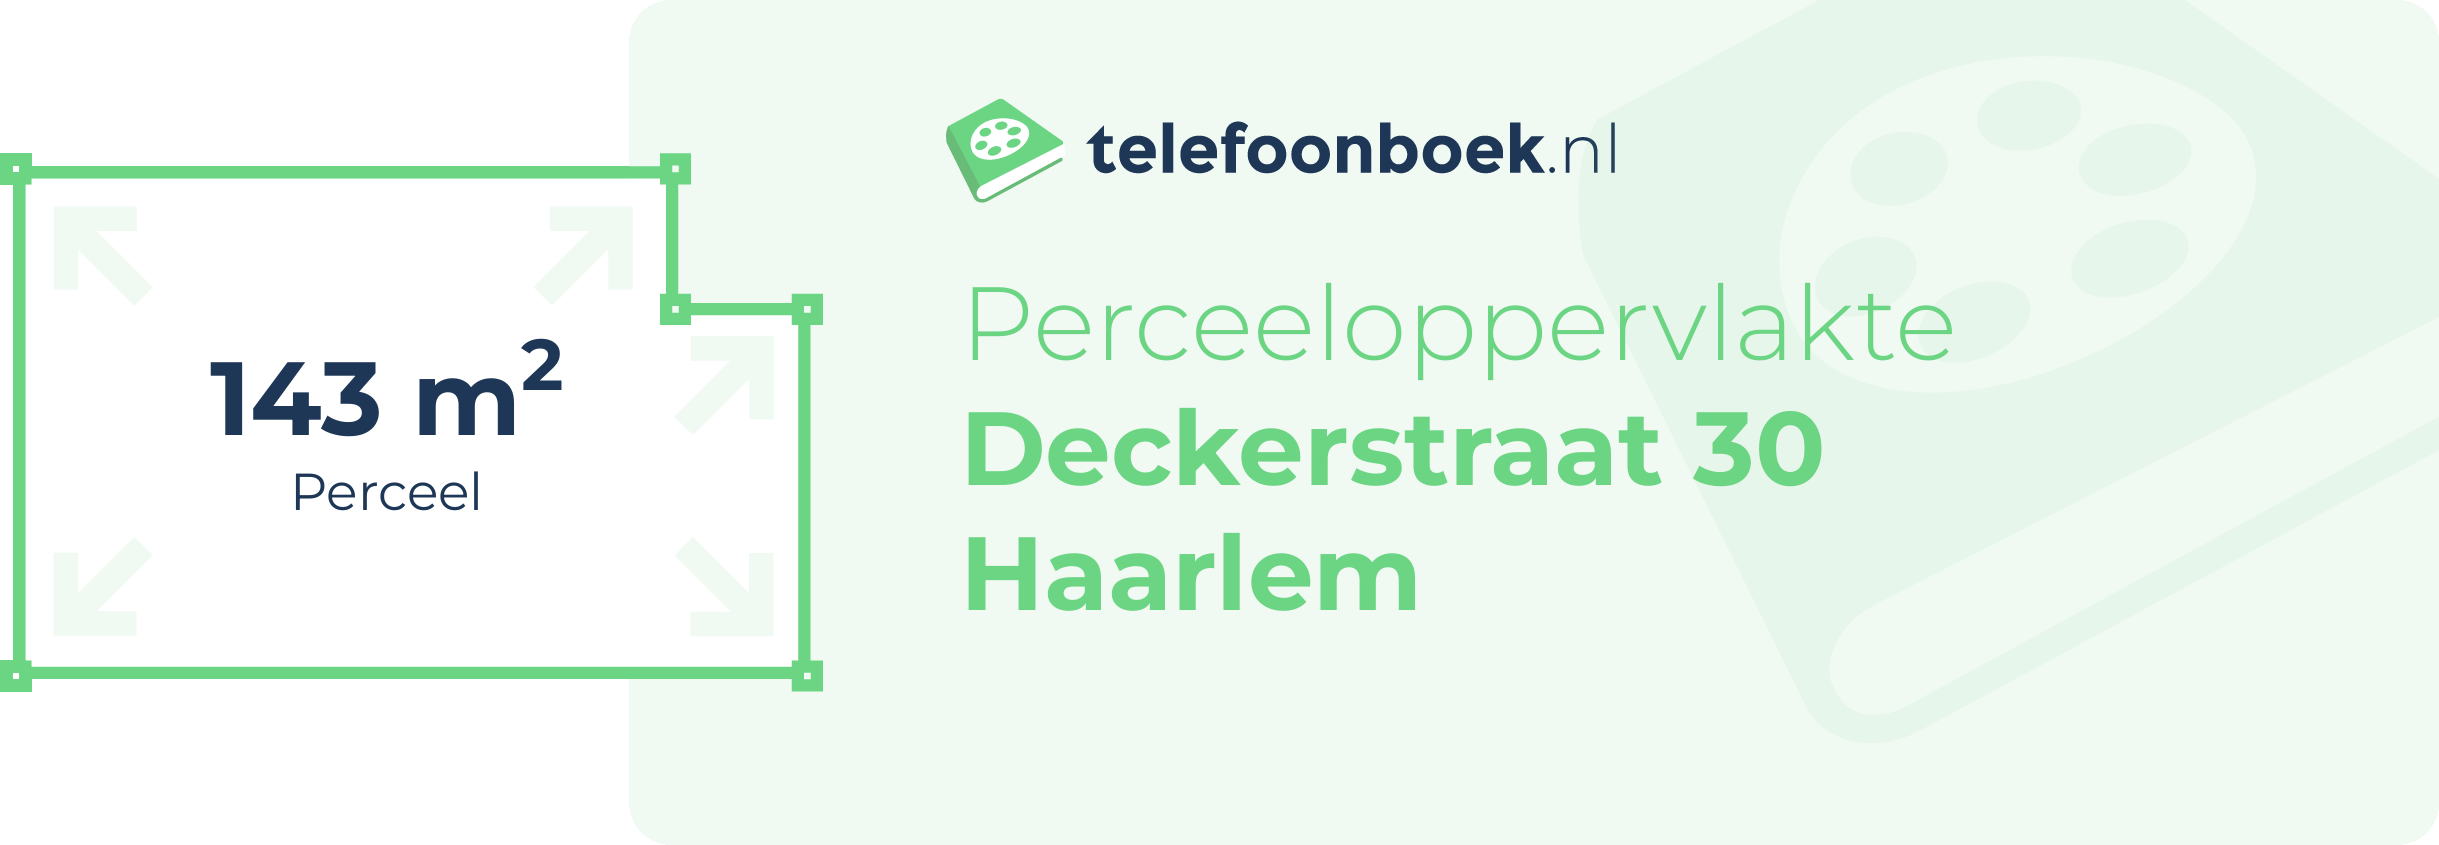 Perceeloppervlakte Deckerstraat 30 Haarlem